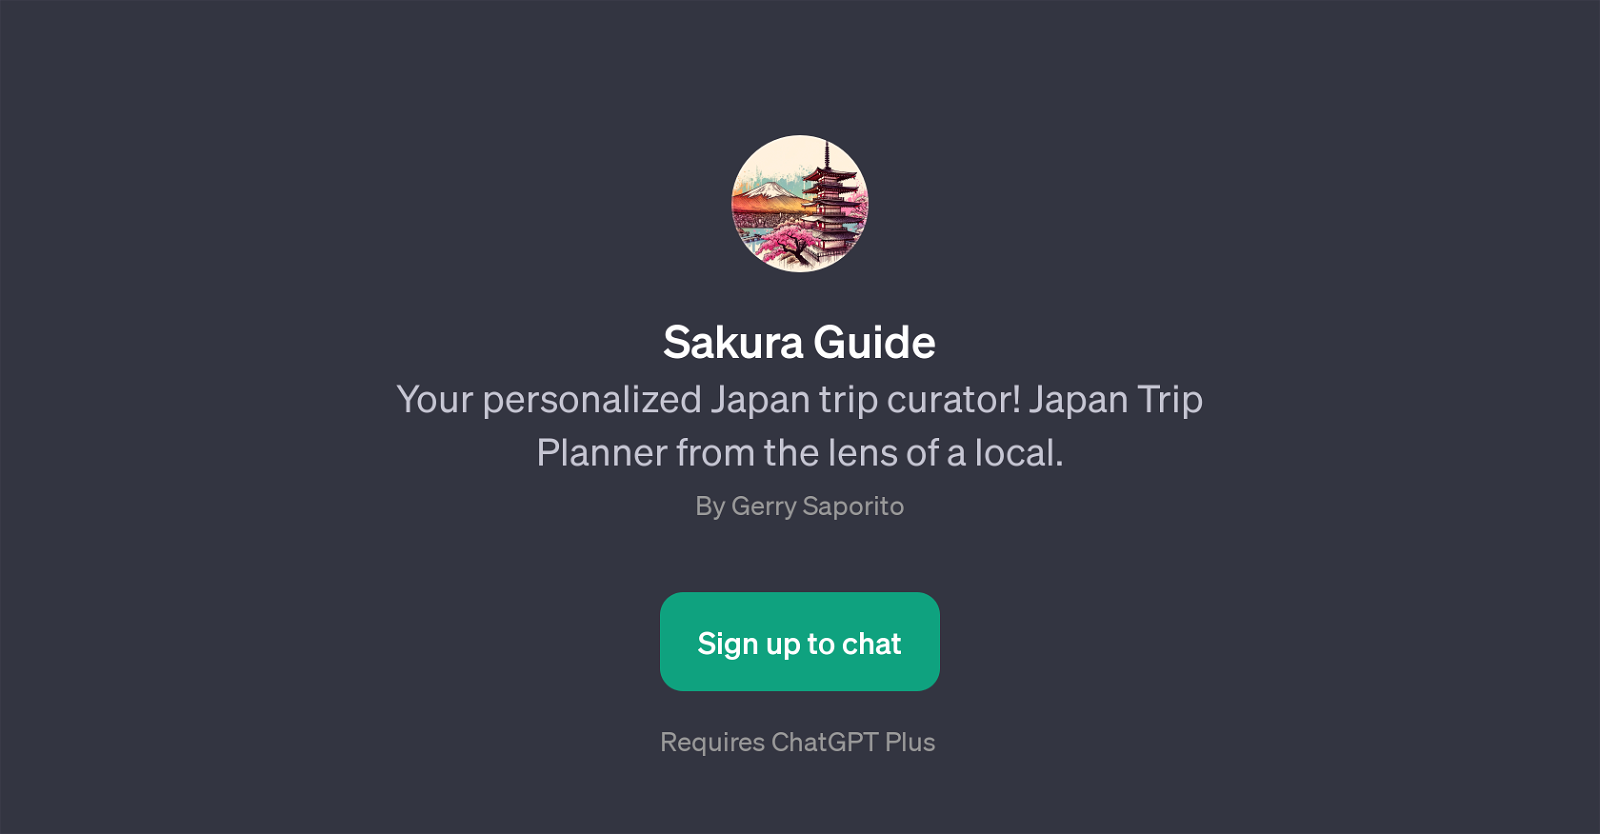 Sakura Guide website